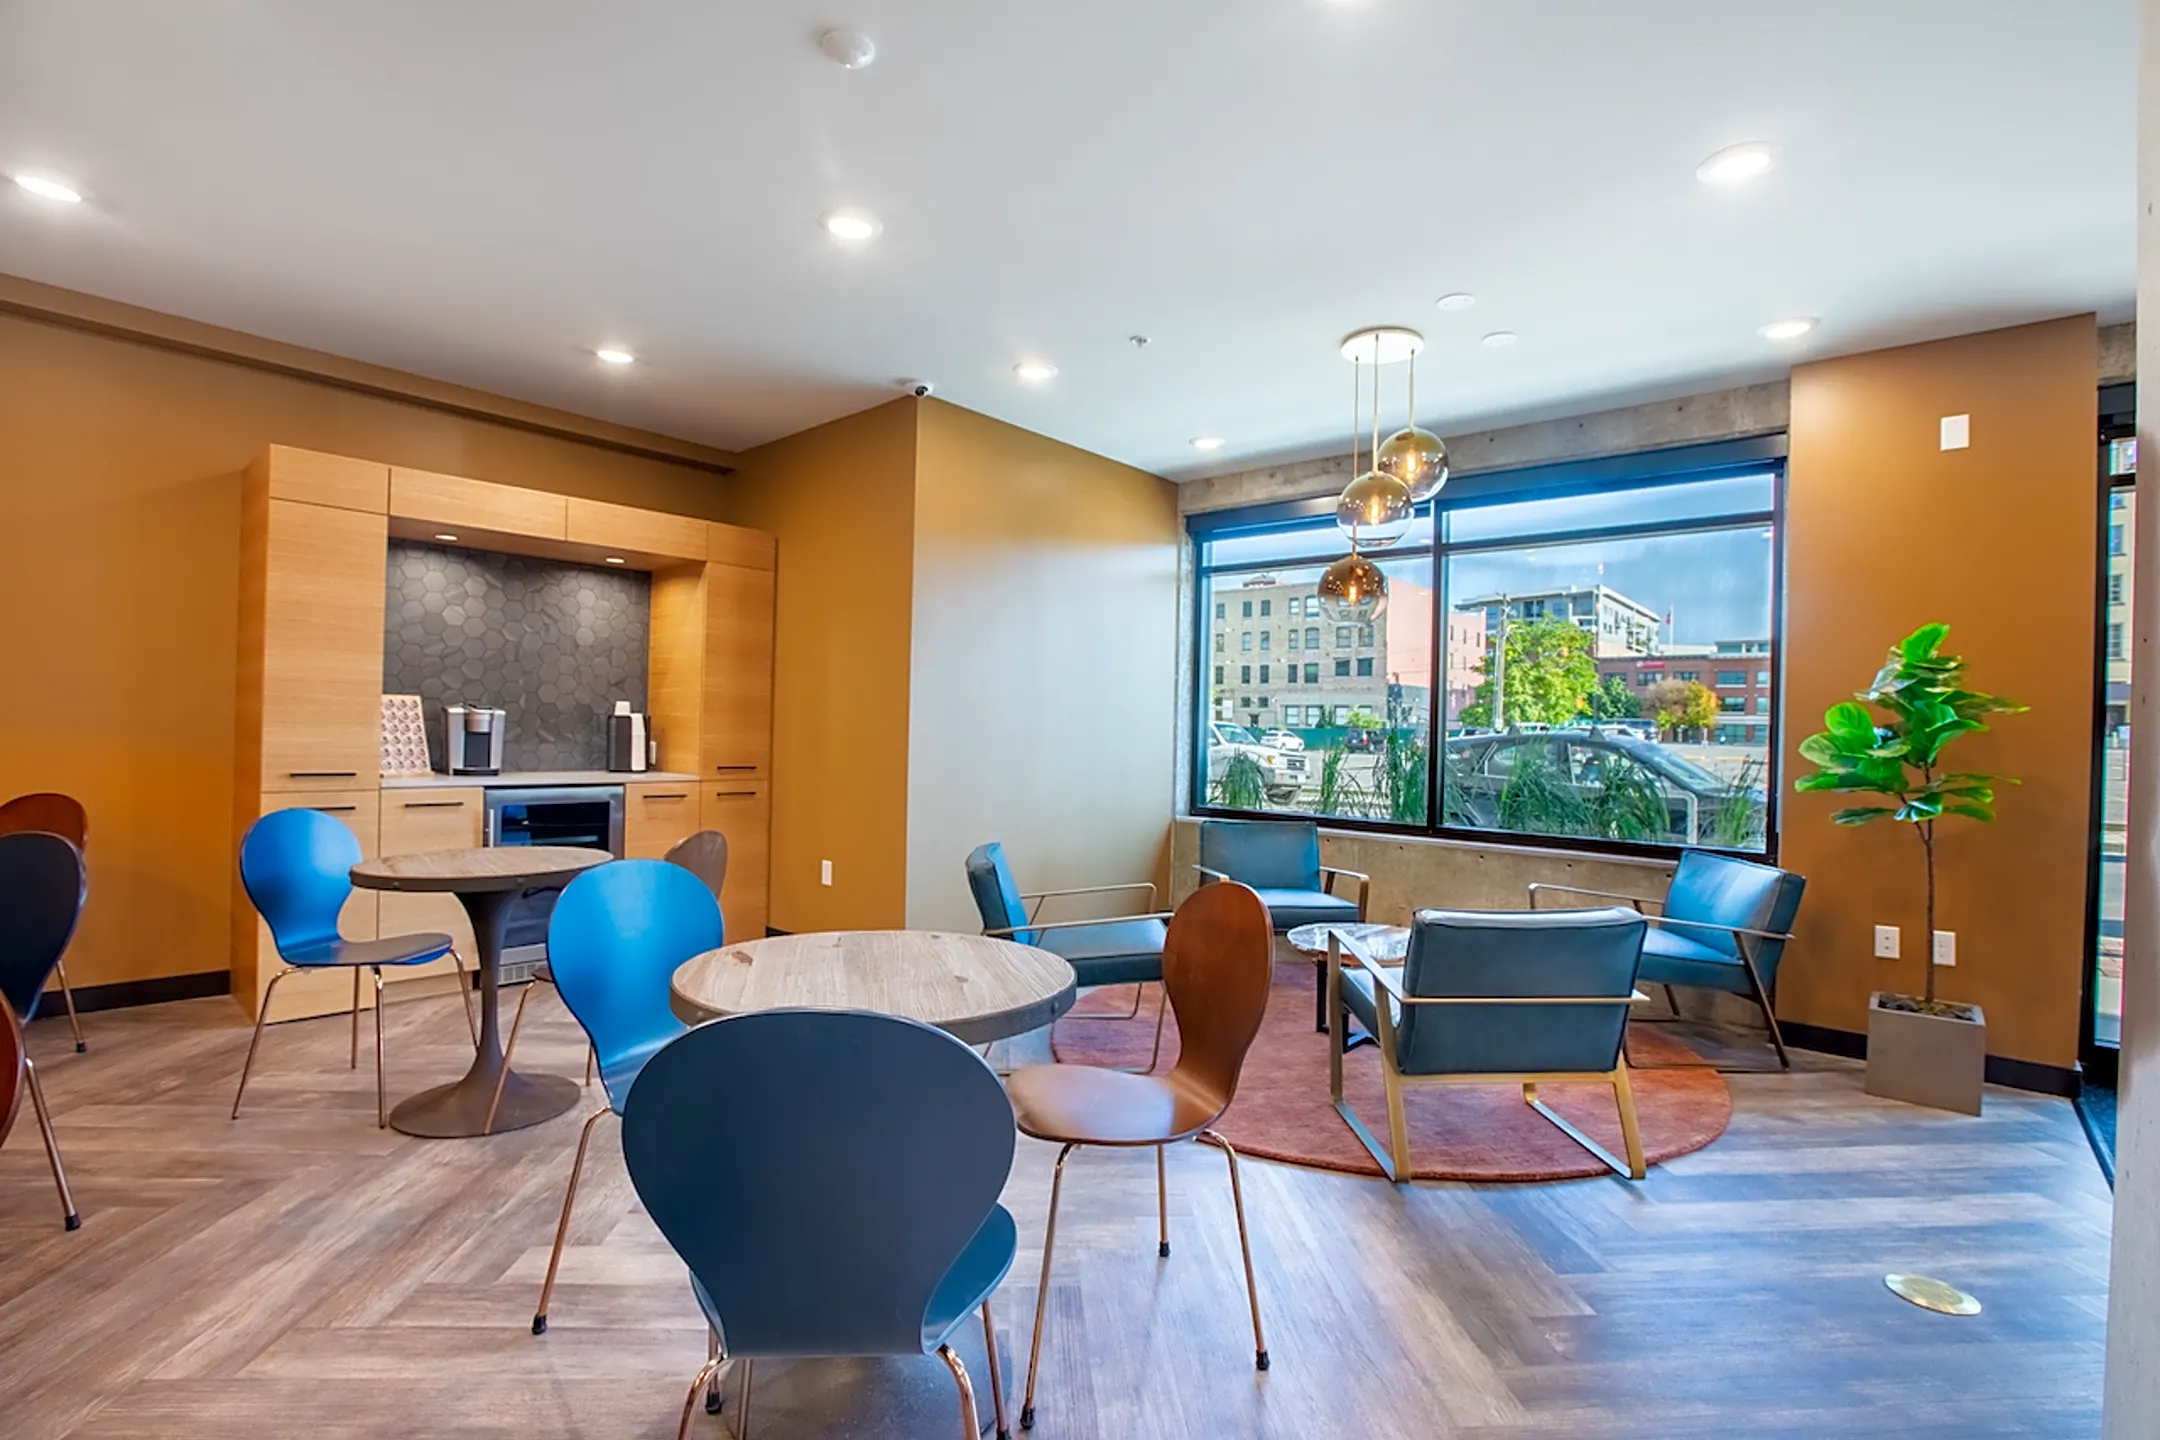 Dining Room - Pierpont Apartments - Salt Lake City, UT